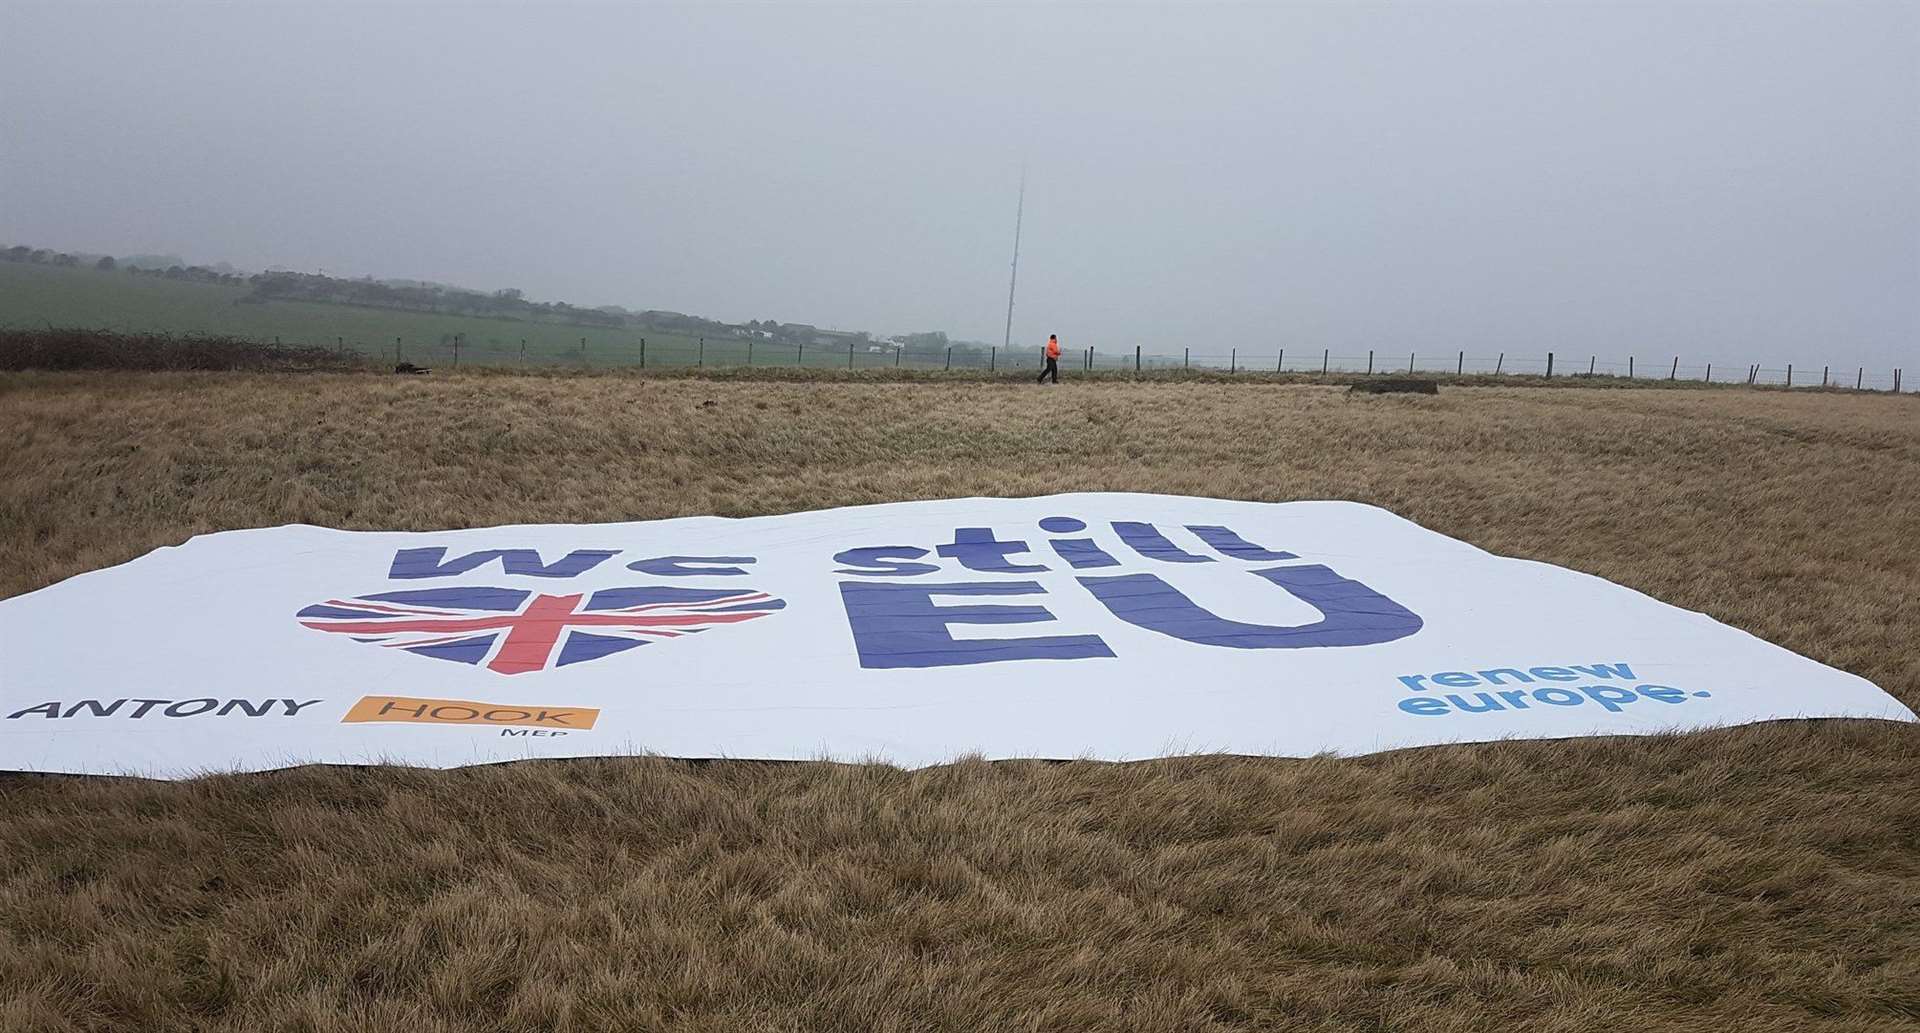 A close-up of the gigantic pro-EU banner